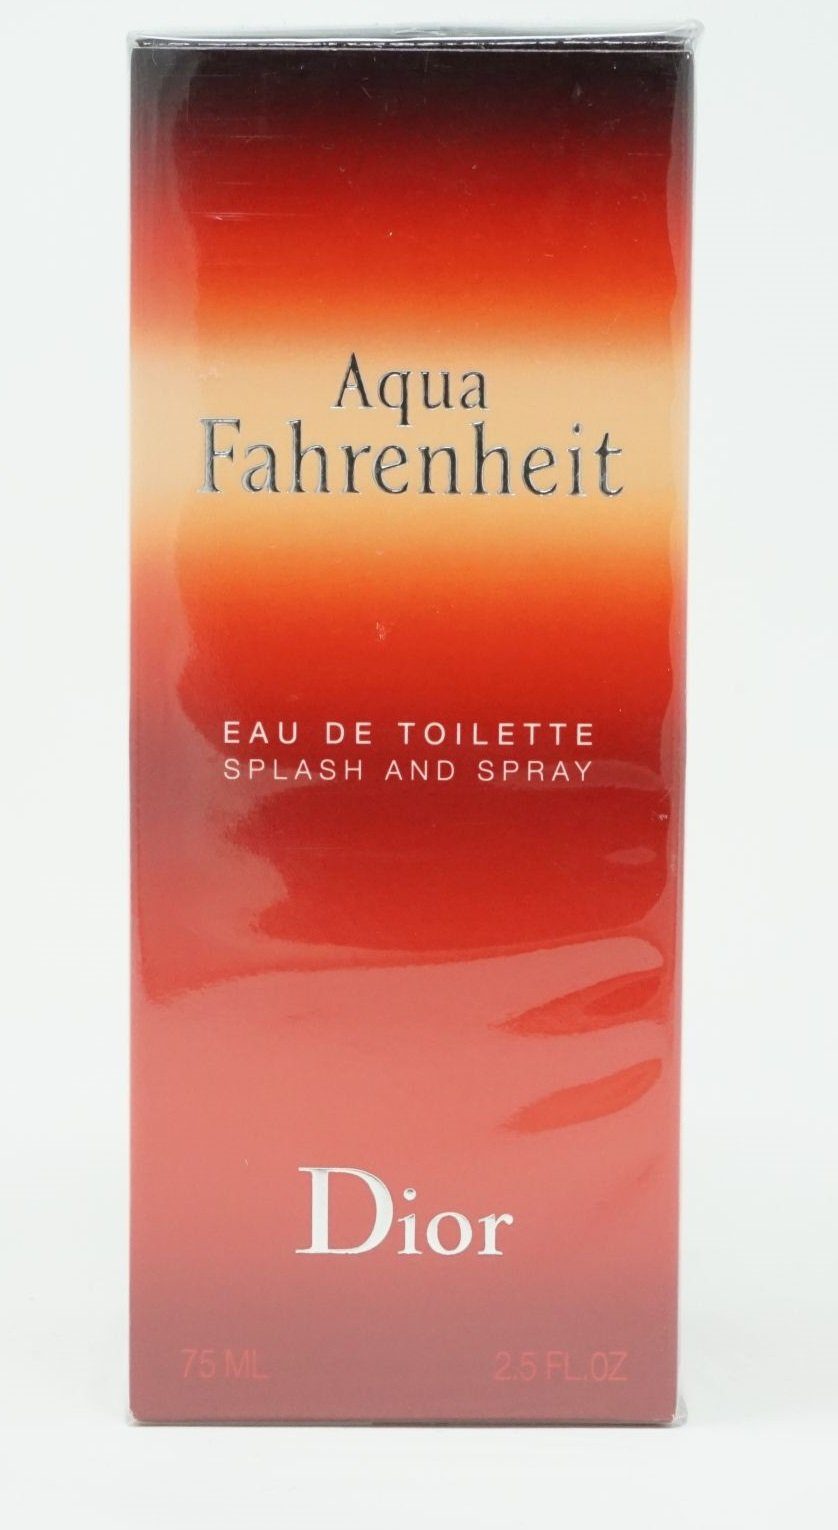 Toilette de Eau Fahrenheit 75ml de Splash Spray Aqua and Eau Toilette Dior Dior